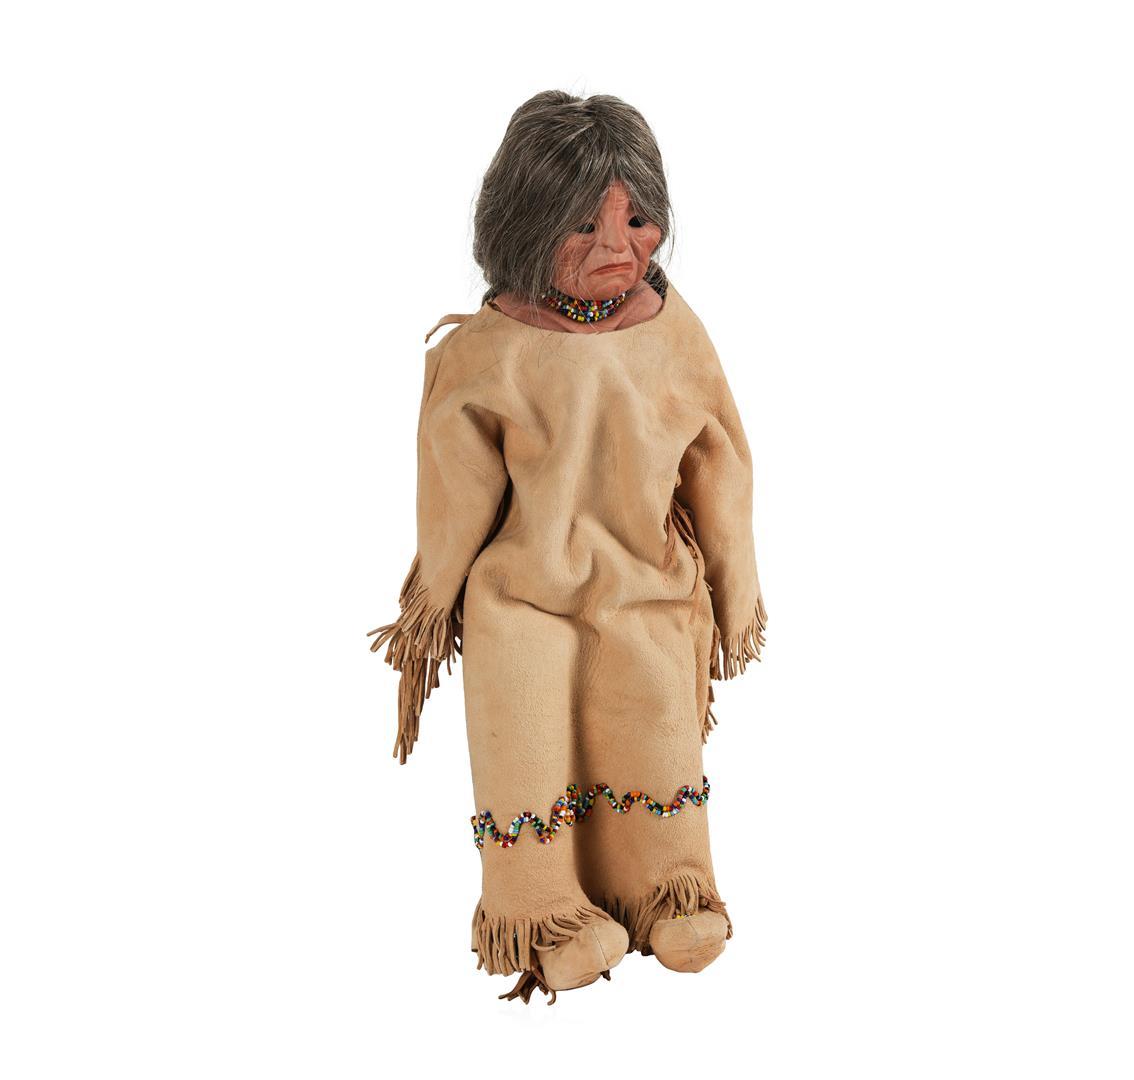 J. Turner - Set of Two Elderly Native American Dolls